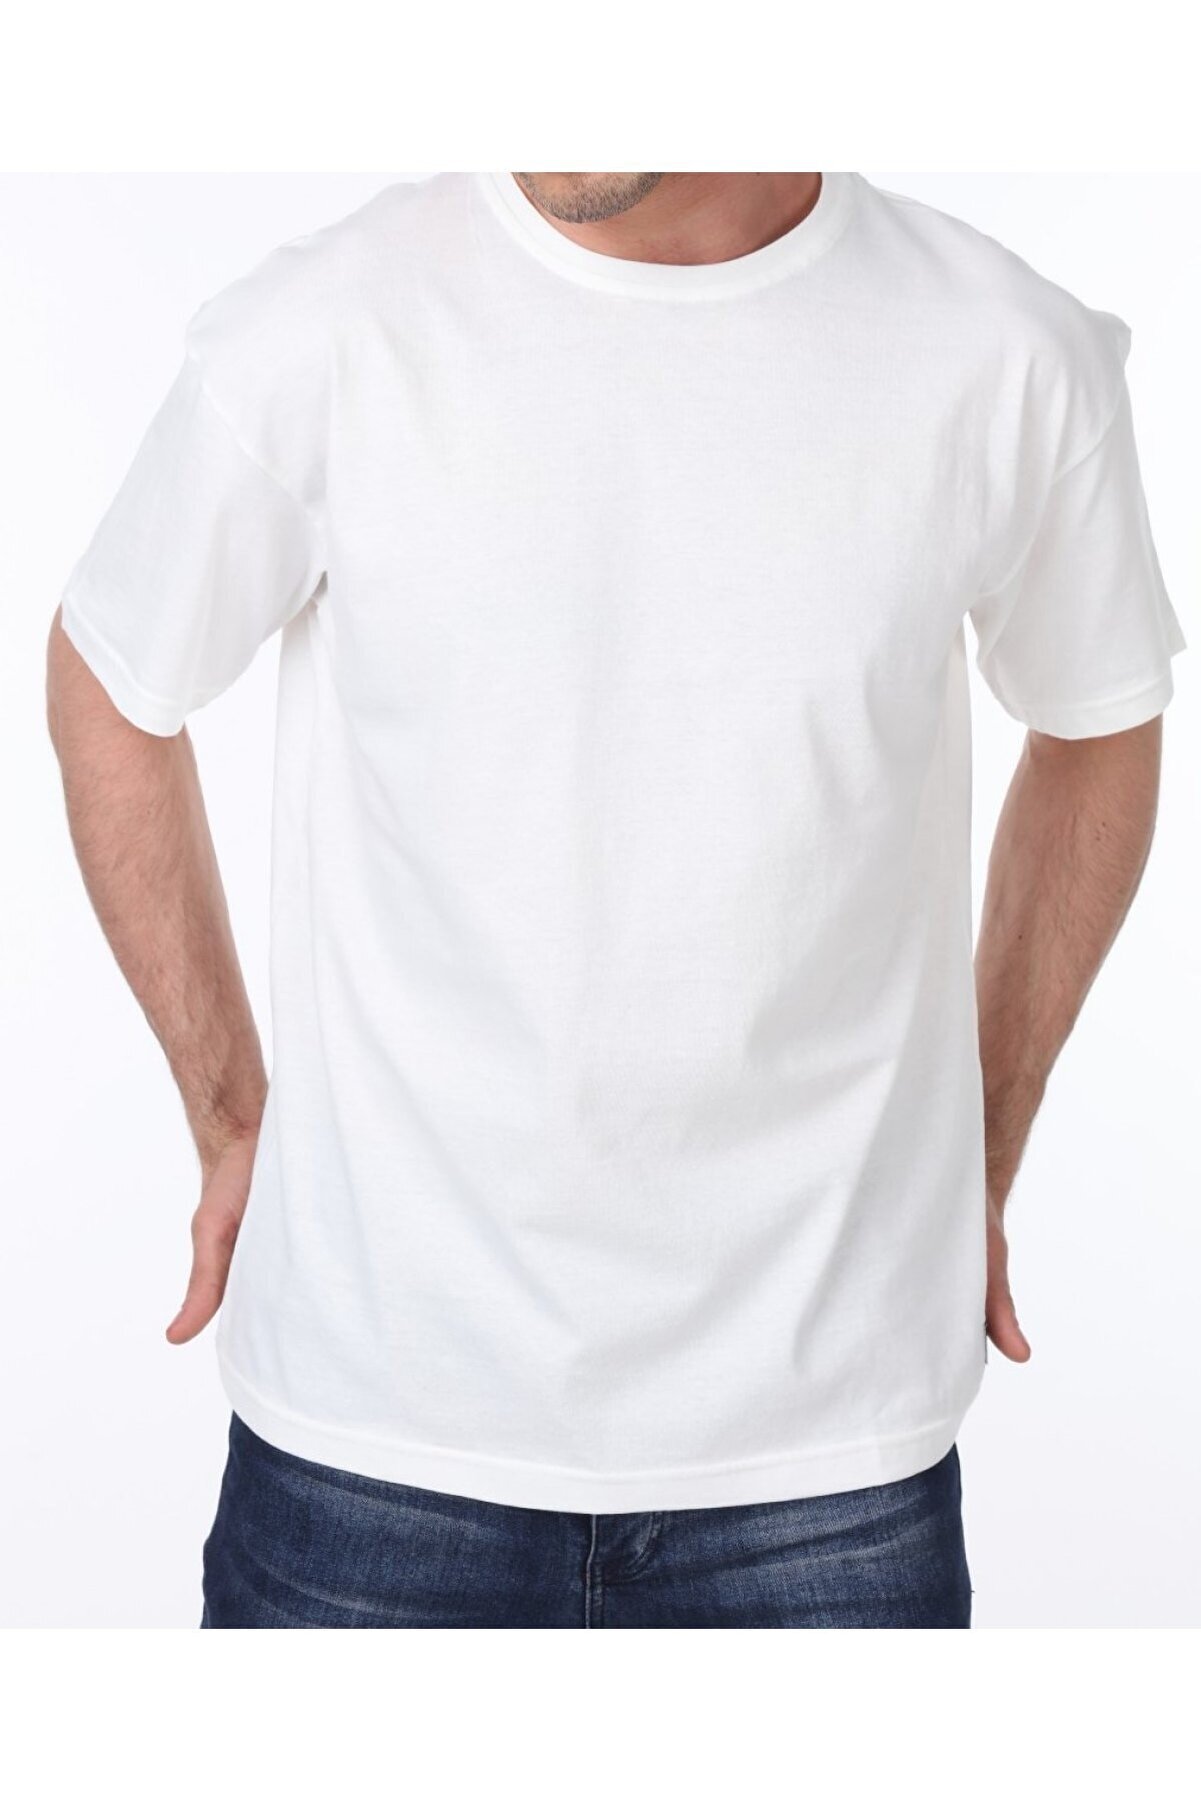 GENIUS STORE Erkek Beyaz Oversize Bol Kesim Spor Tshirt